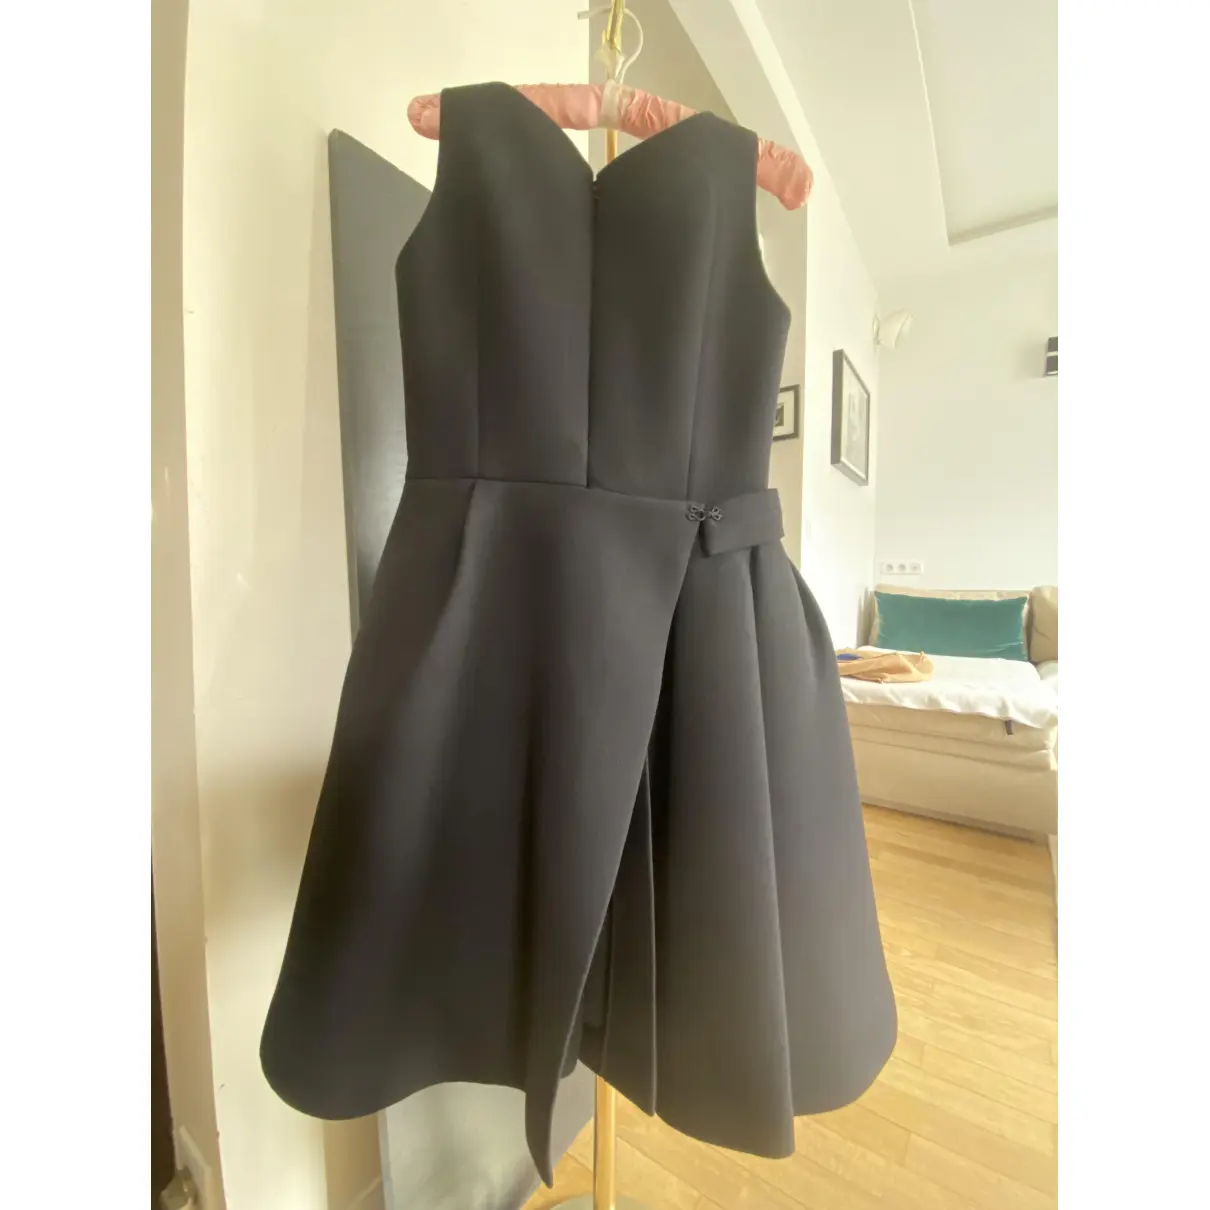 Buy Dice Kayek Mid-length dress online